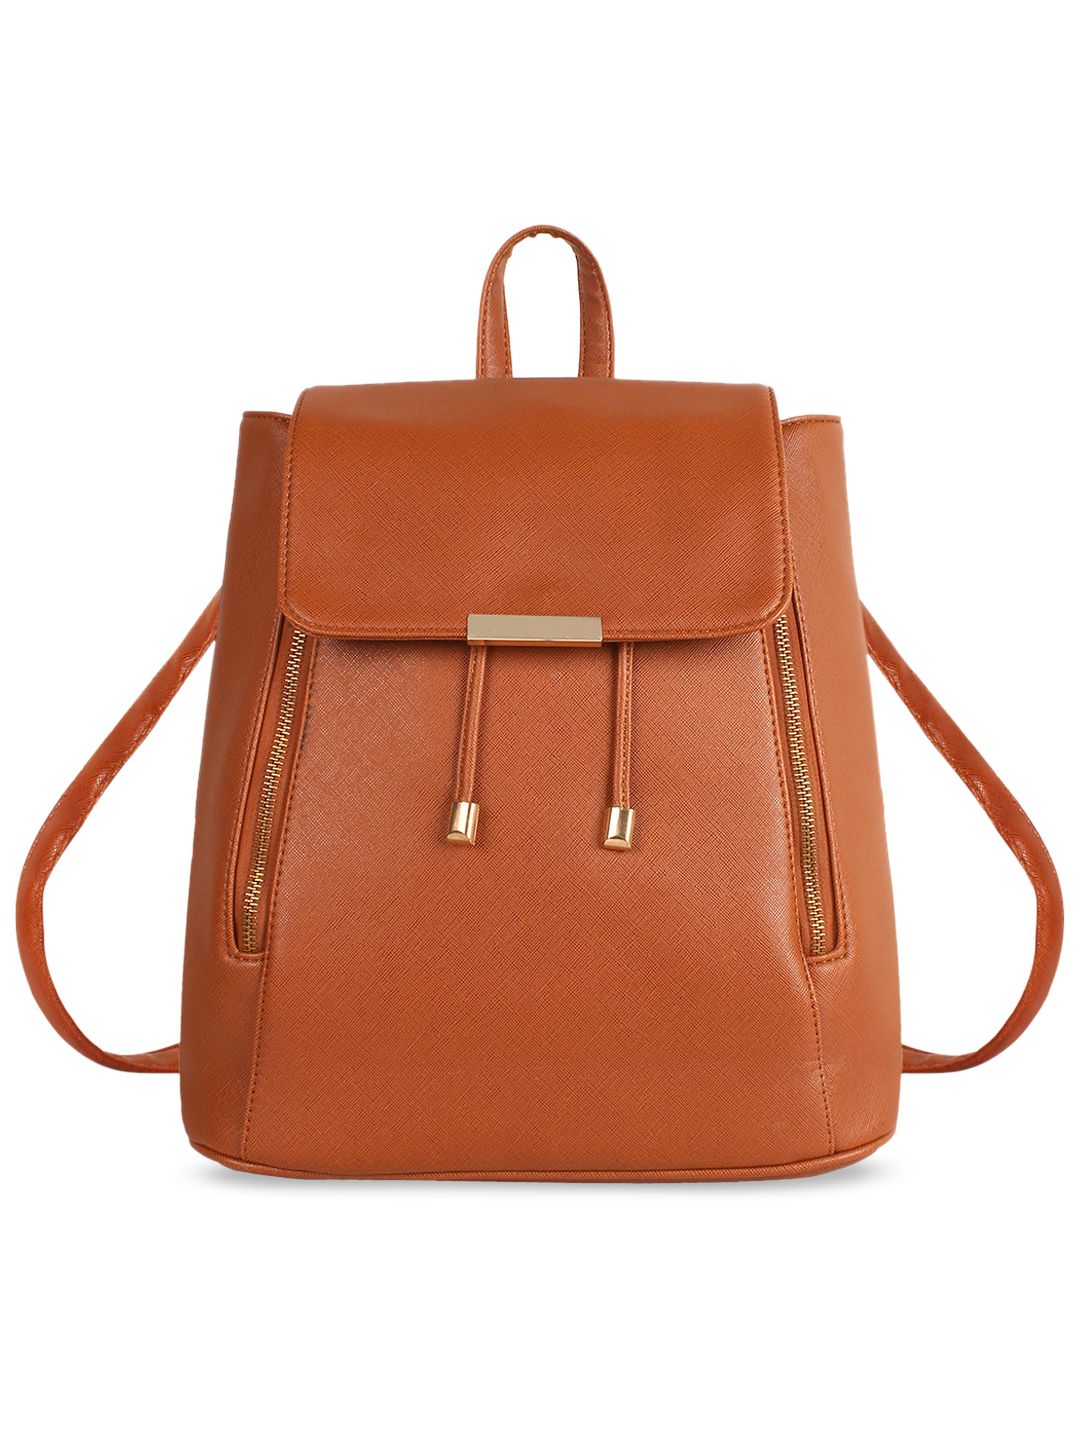 Lychee bags Tan Brown Solid Shoulder Bag Price in India